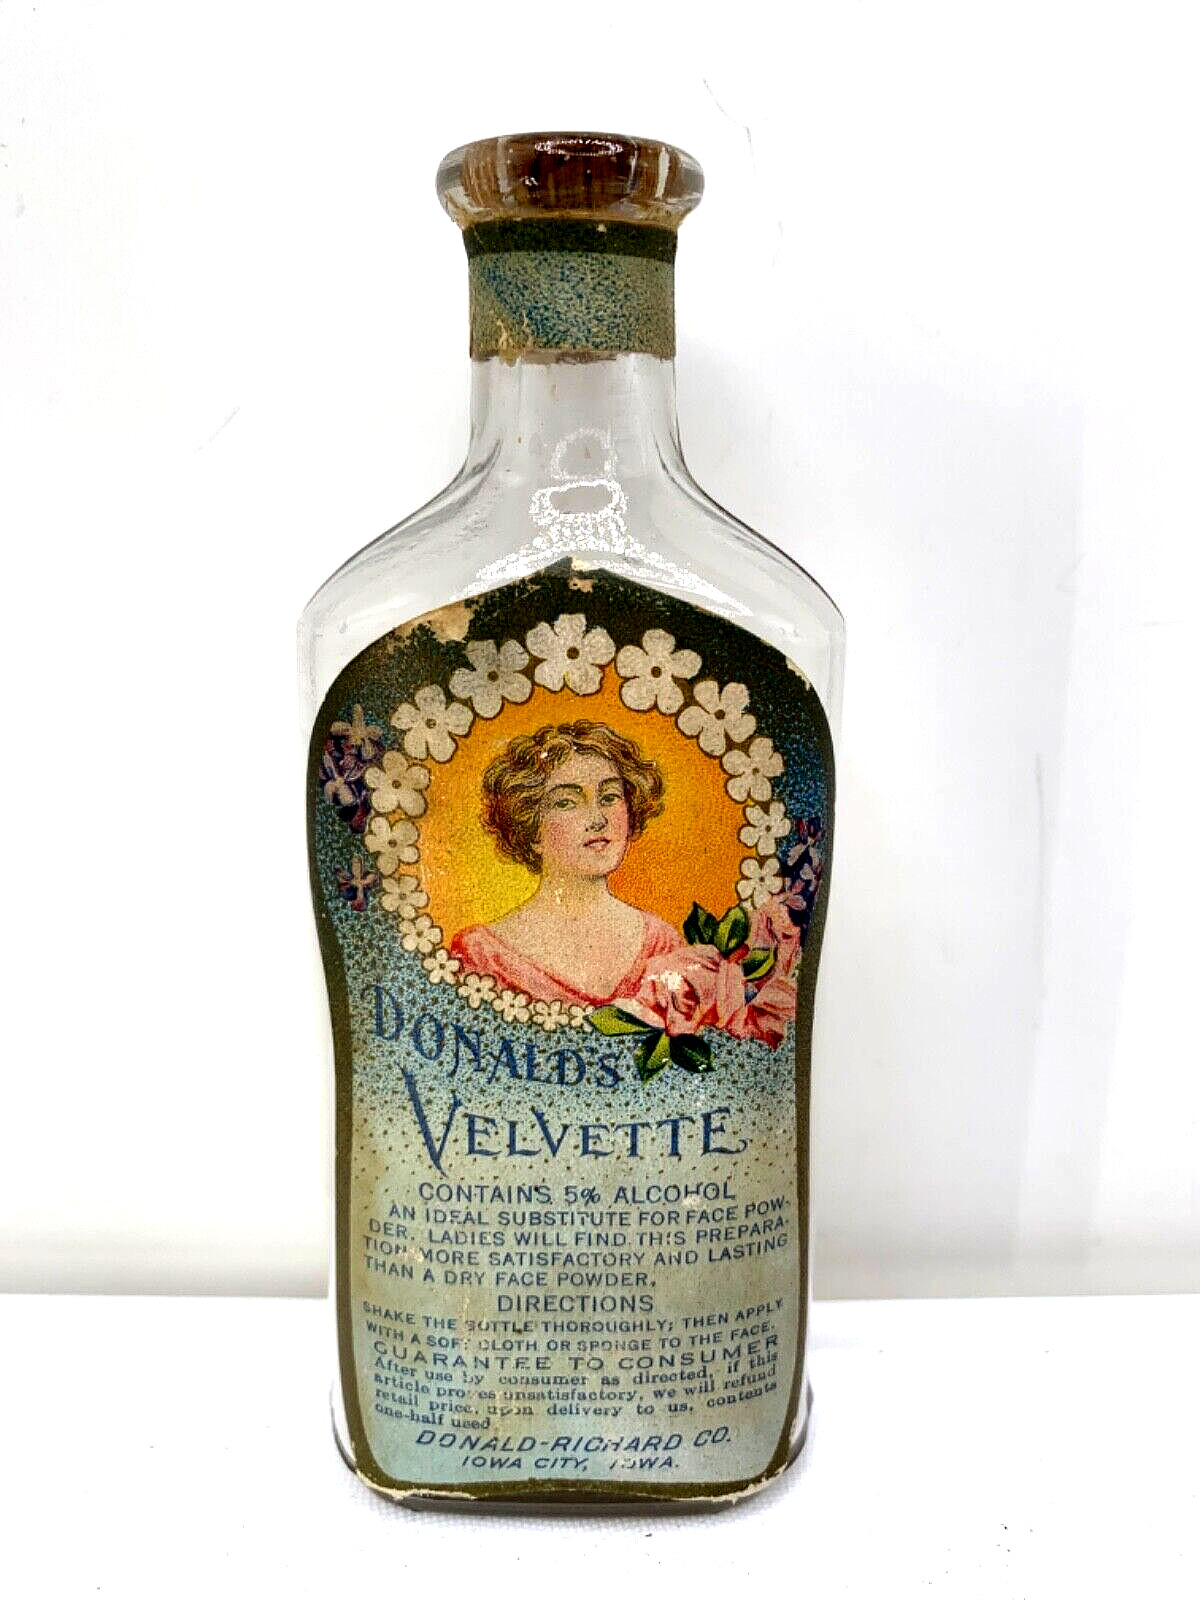 Beautiful Antique perfumed liquid powder bottle. Donald’s Velvette. Early 1900s